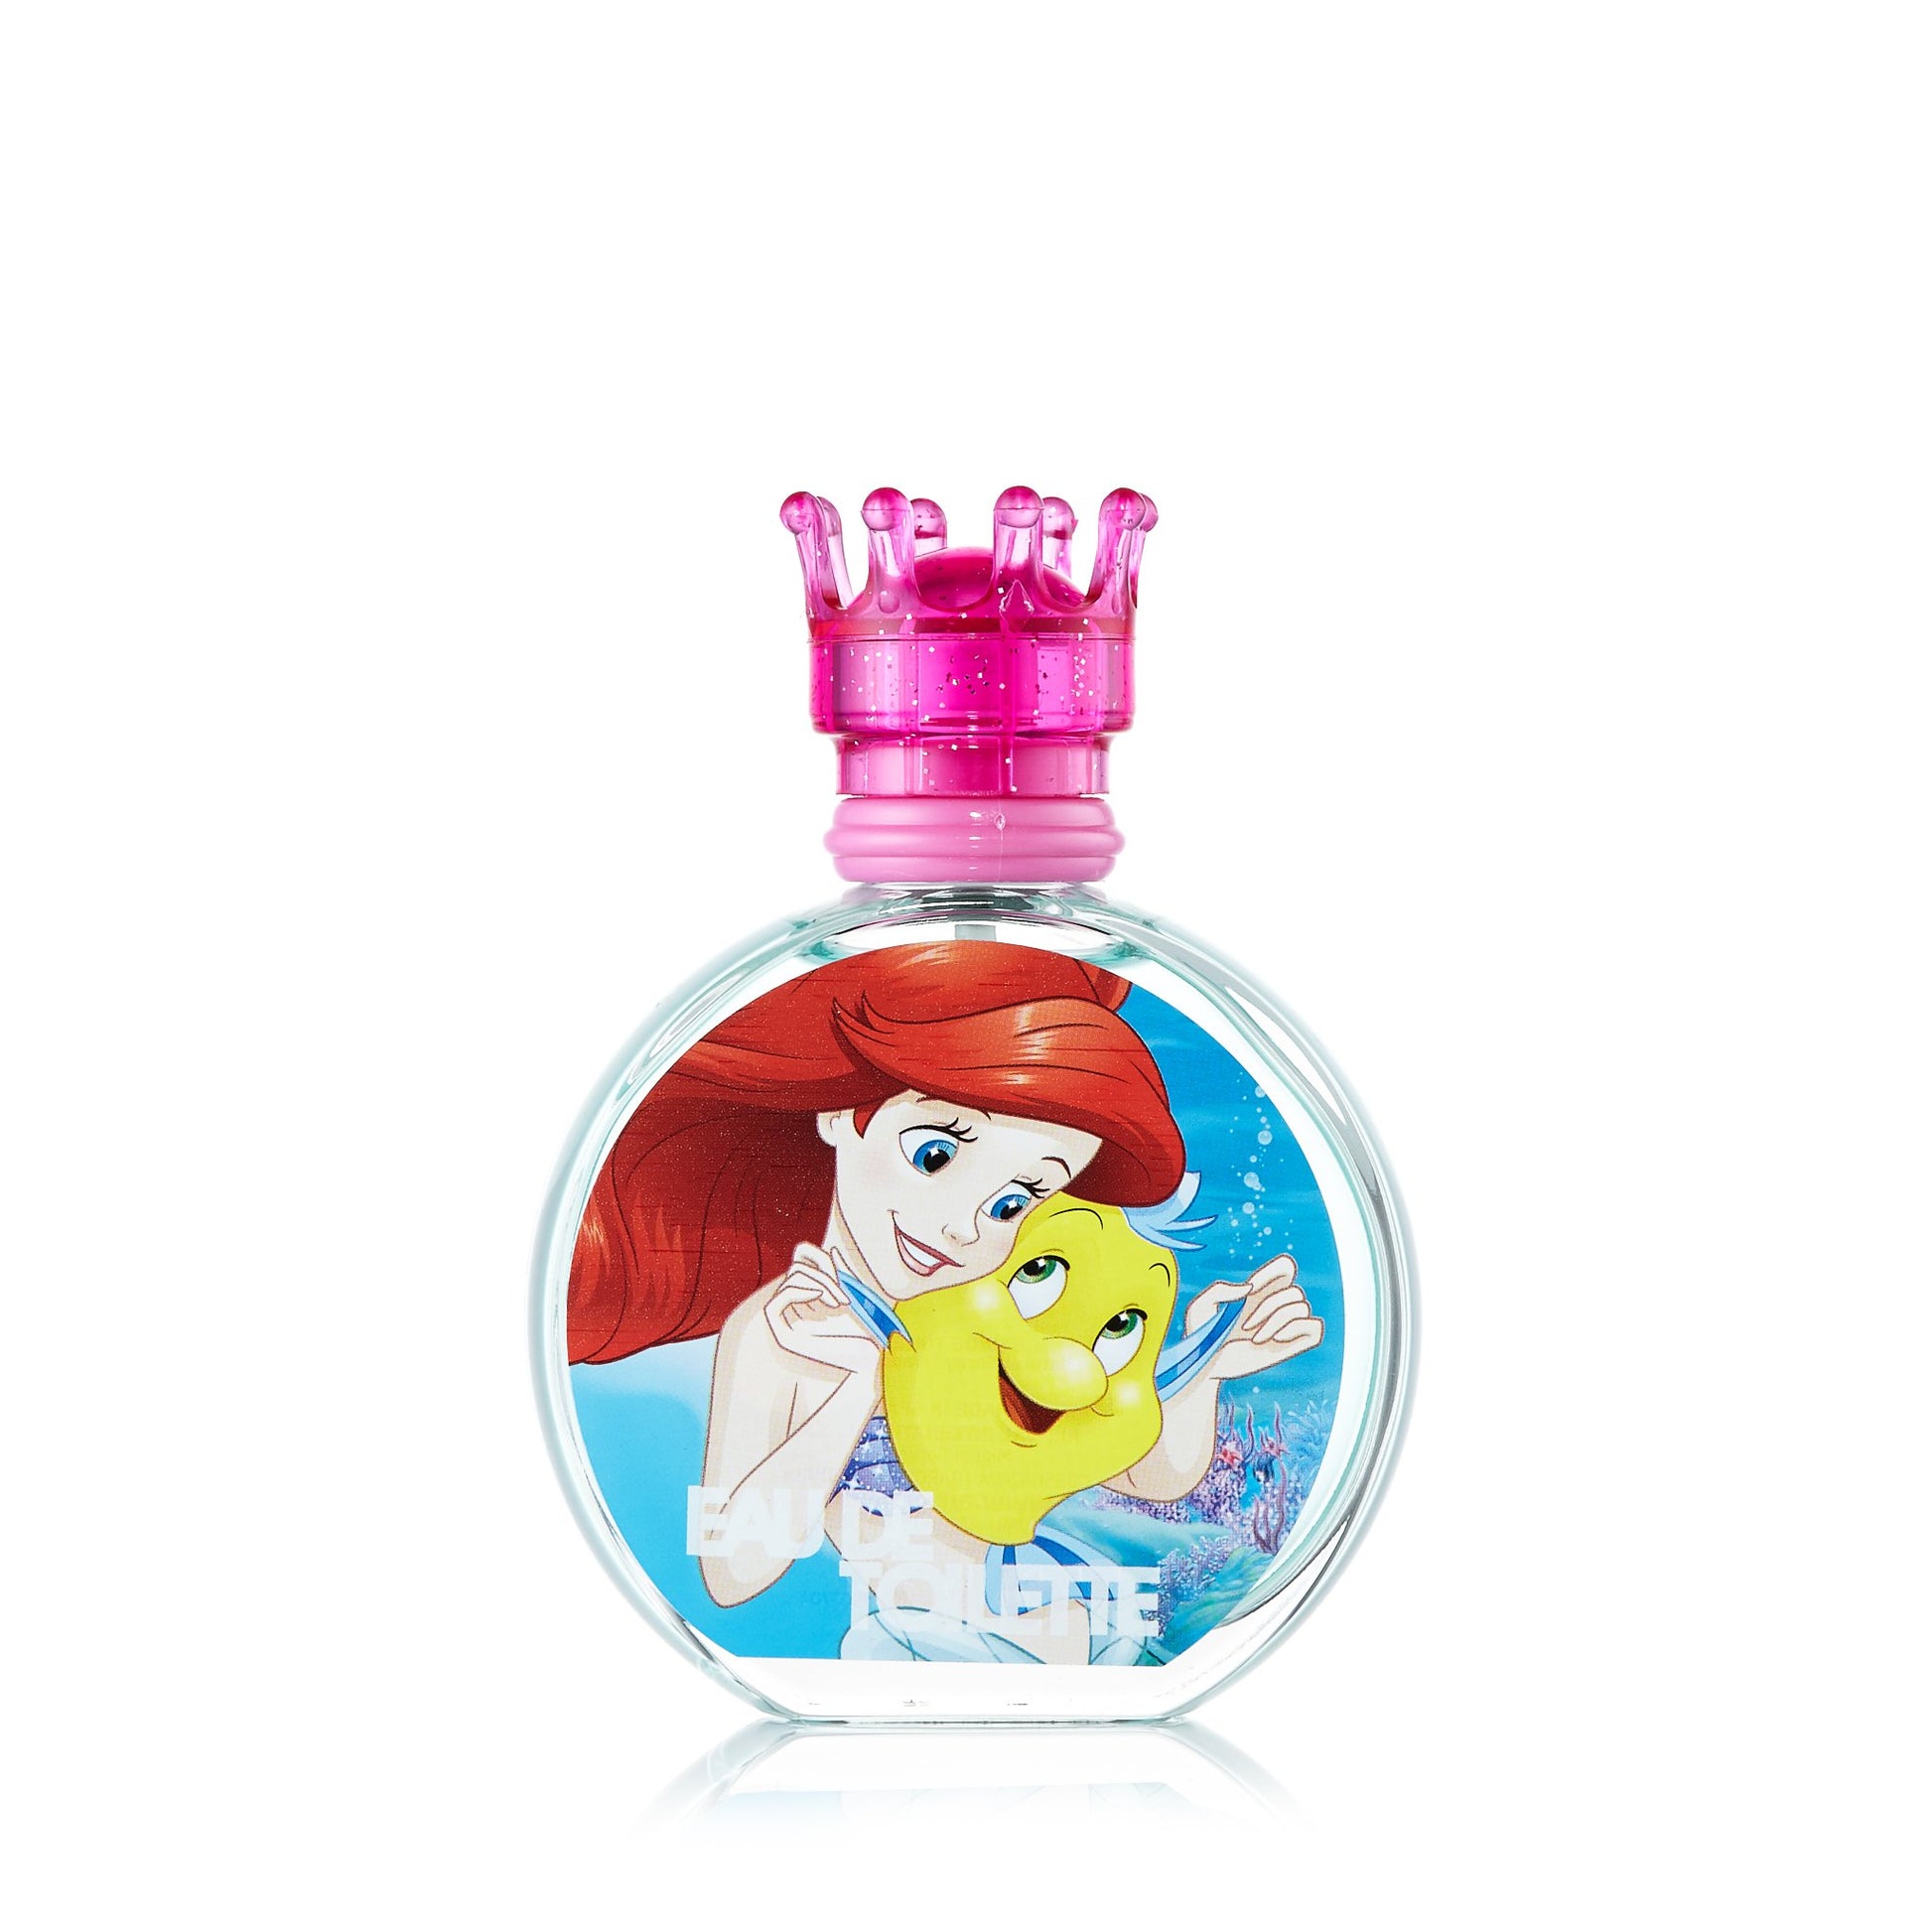 Little Mermaid Eau de Toilette Spray for Girls by Disney, Product image 2